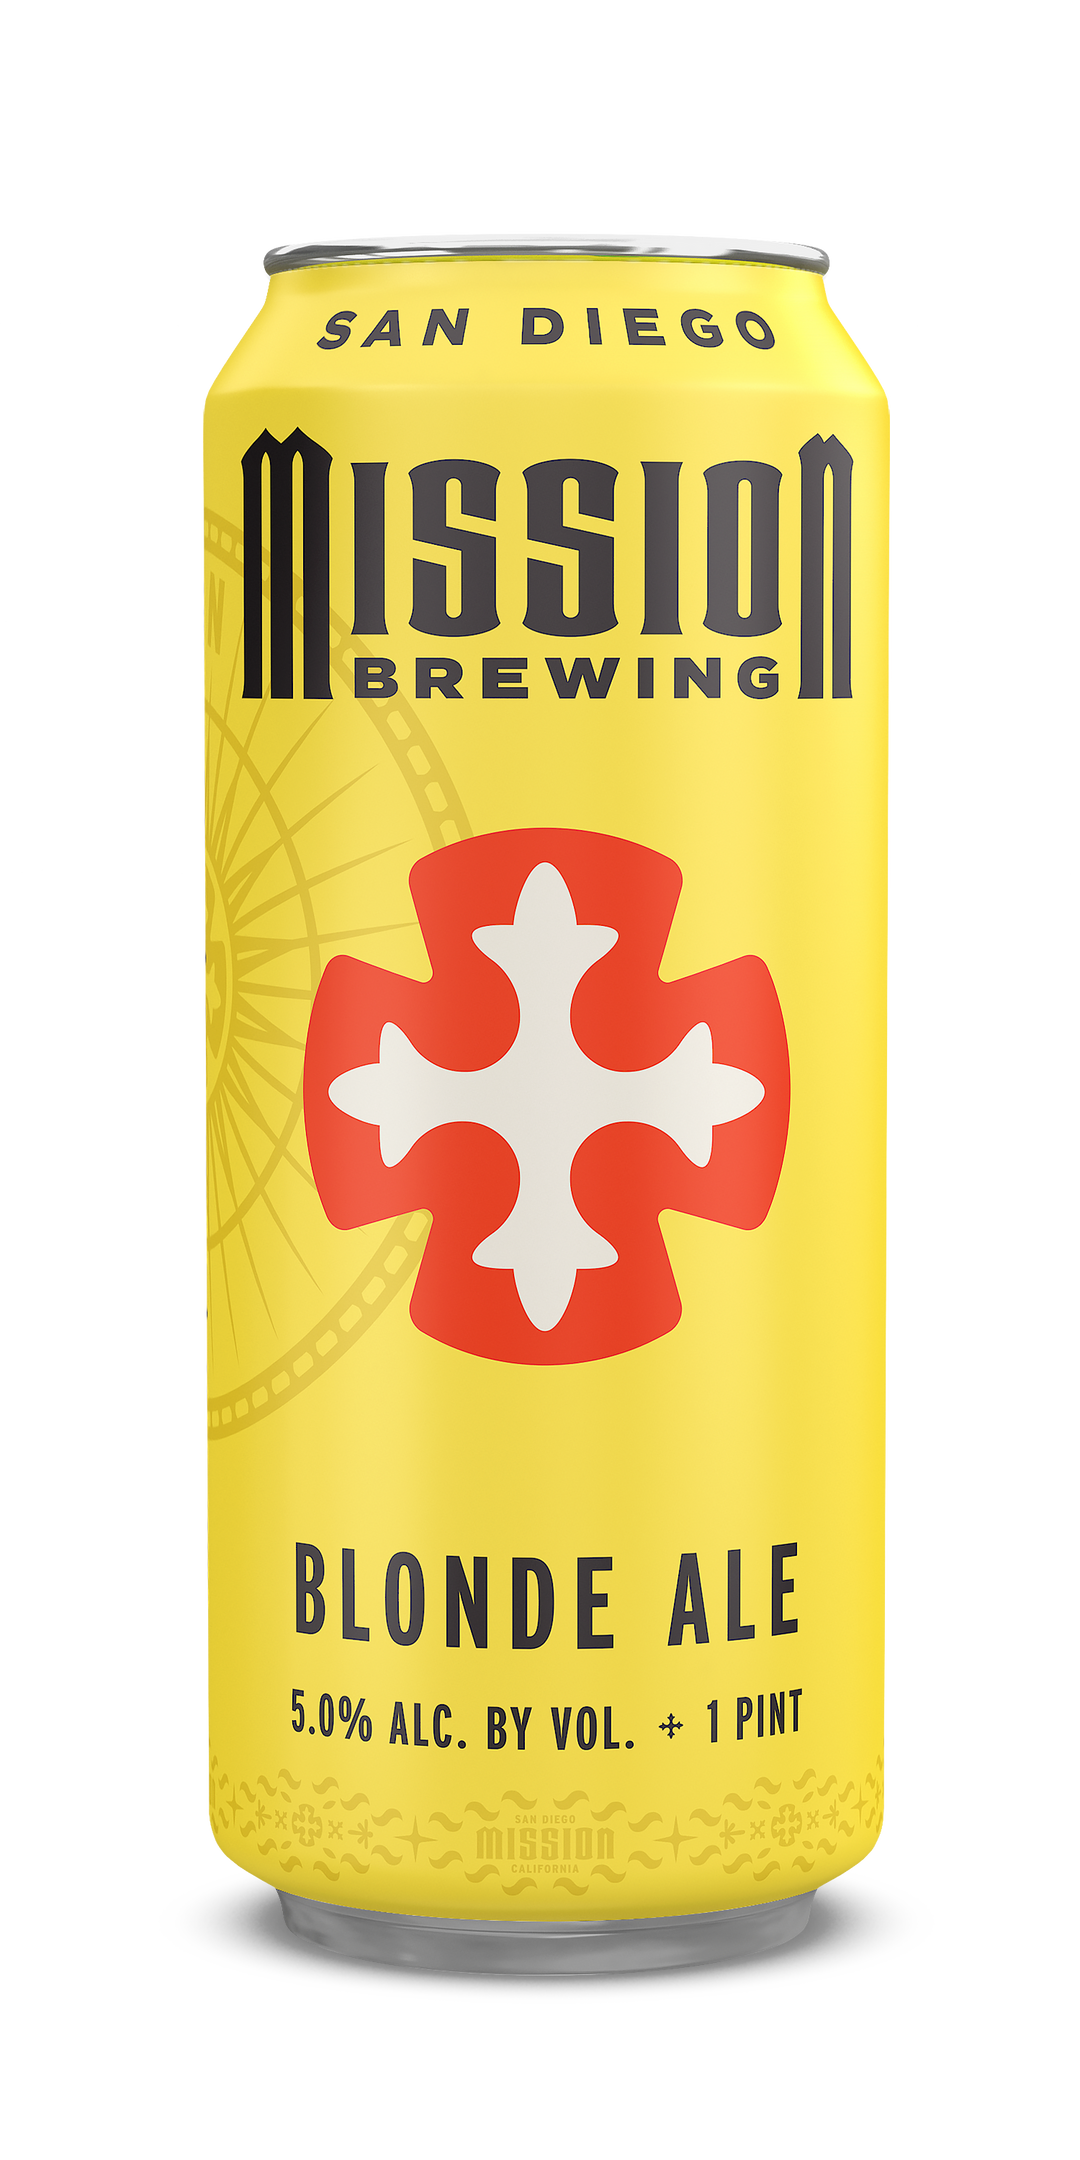 Mission Blonde Ale